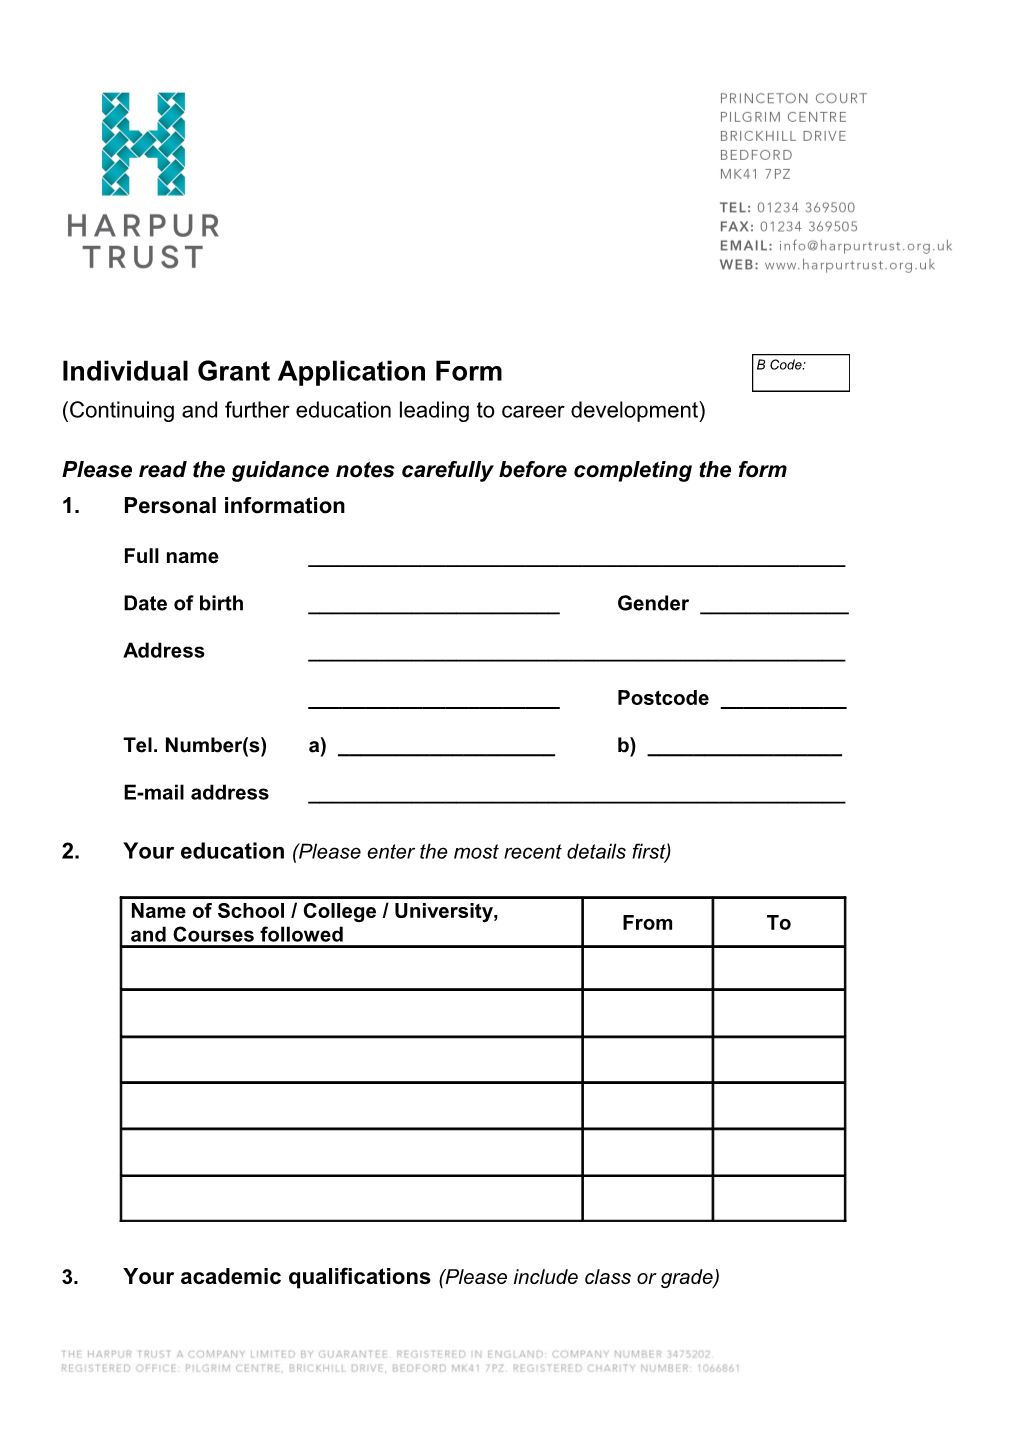 Individual Grant Application Form